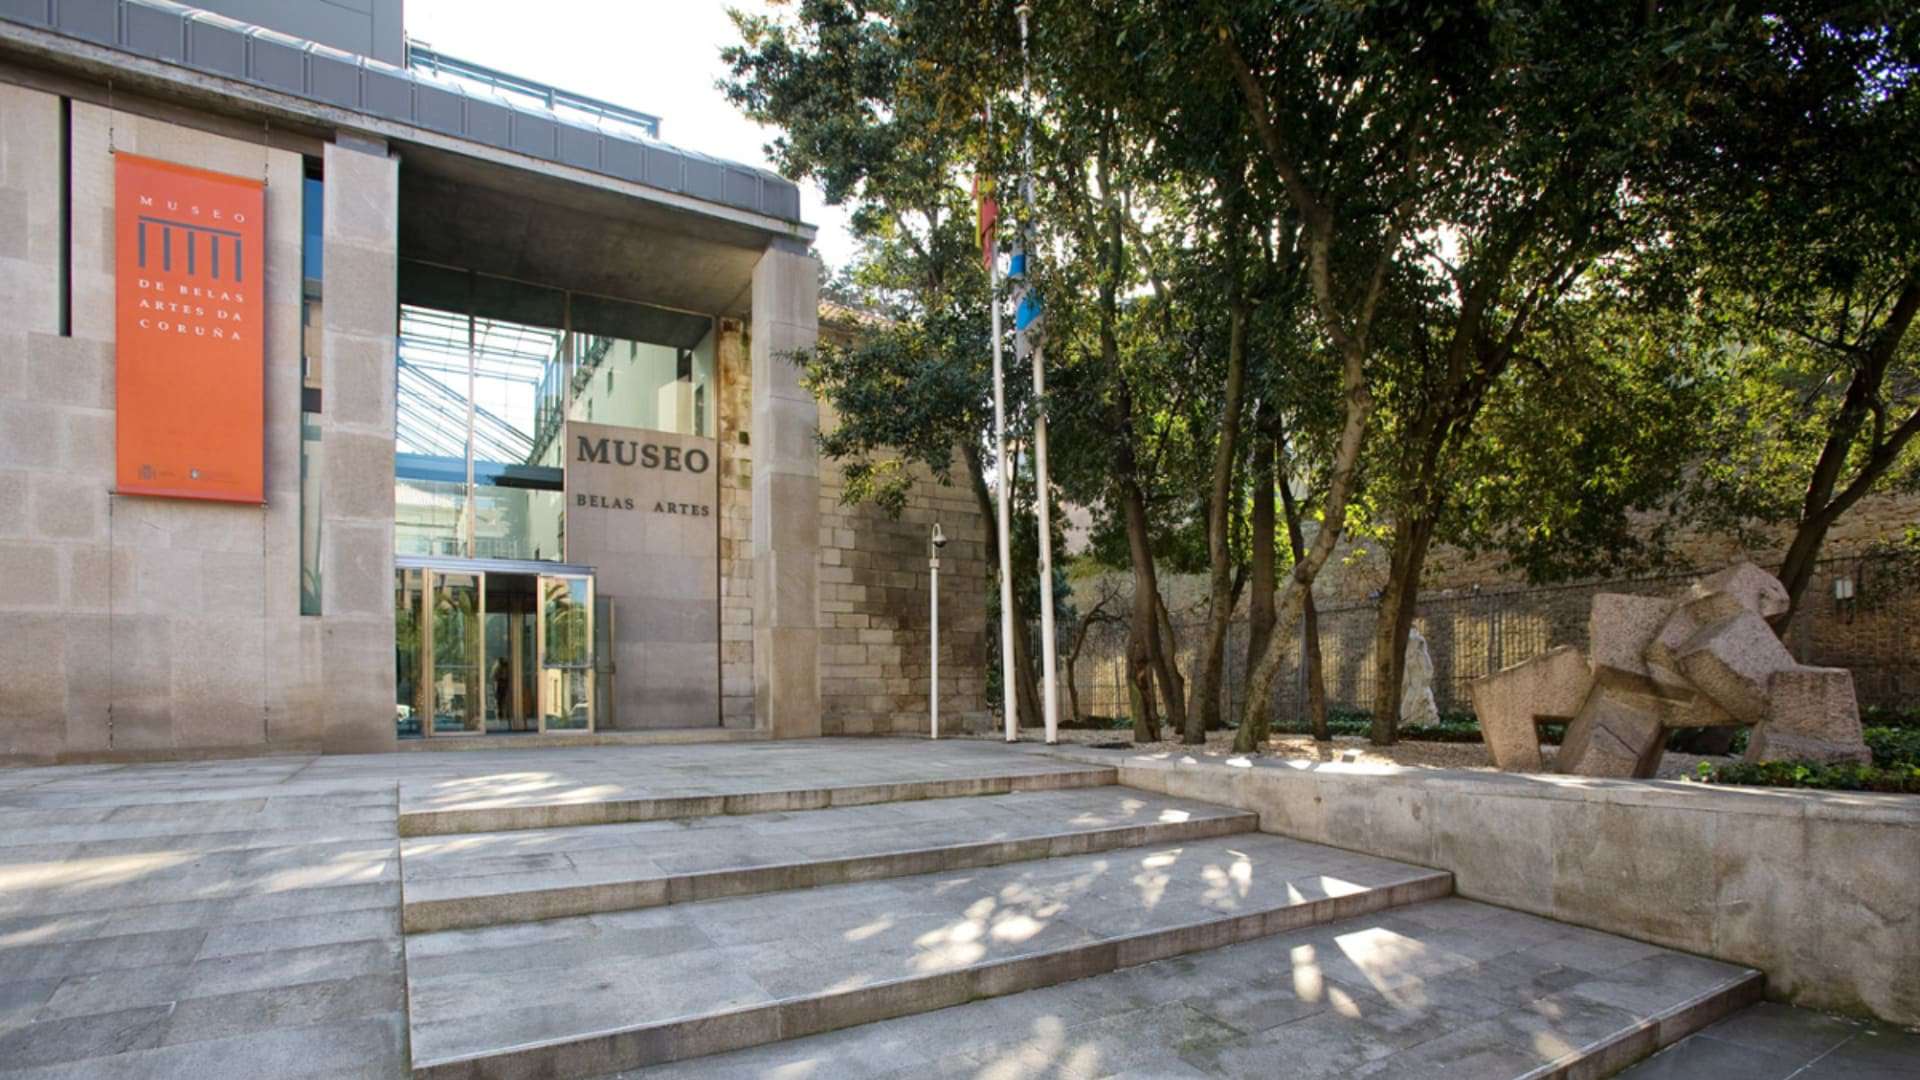 El Museo de Belas Artes de A Coruña | CONCELLO DA CORUÑA